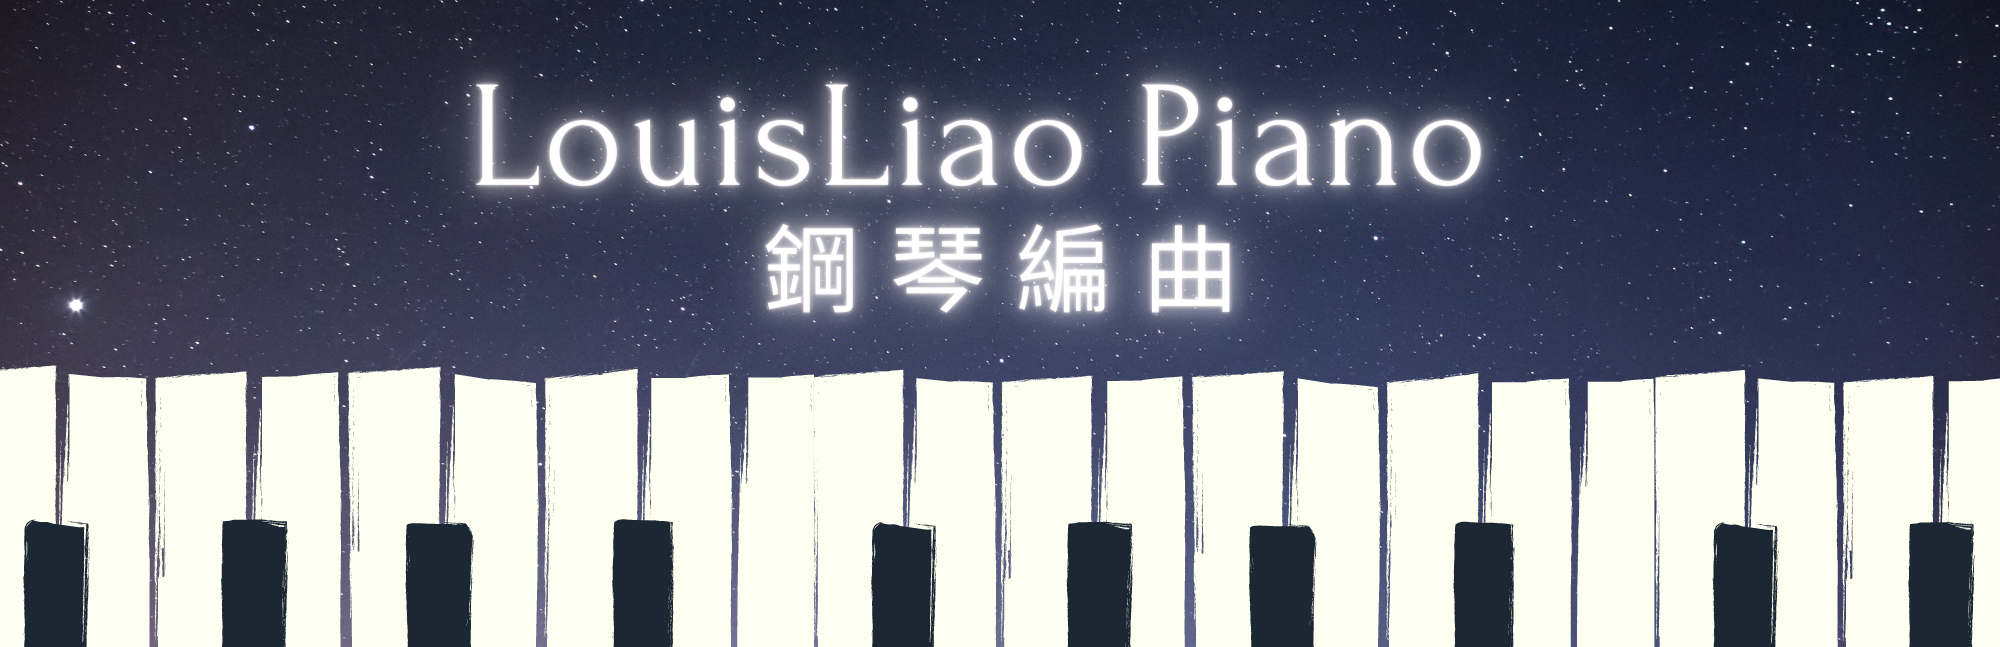 LouisLiao Piano 鋼琴編曲 (1).png